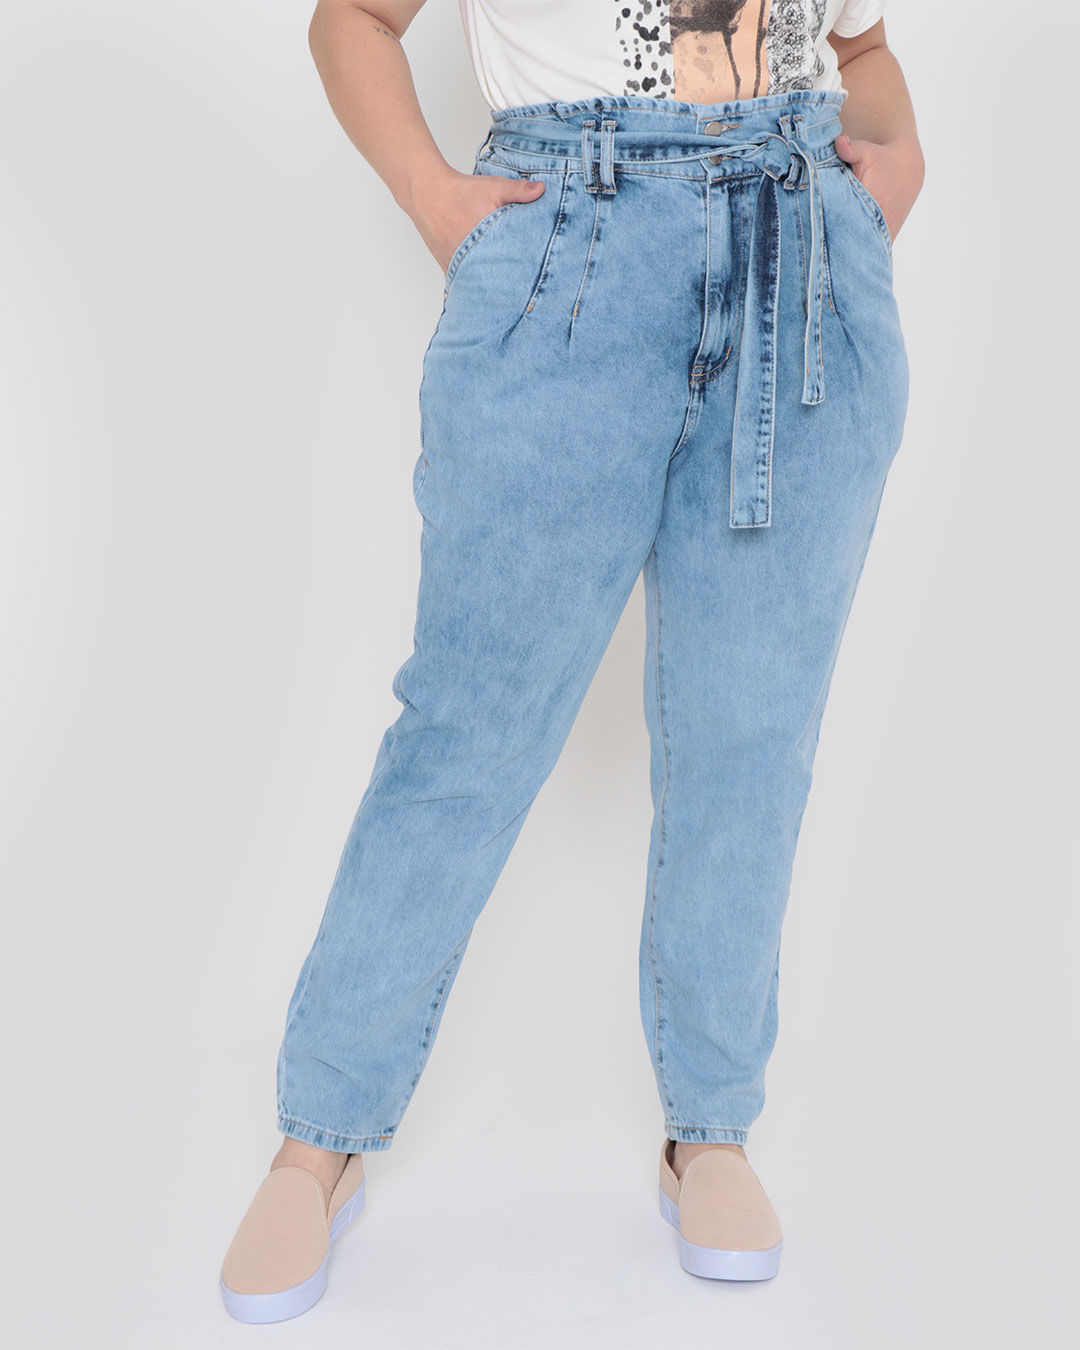 Calca-Jeans-Feminina-Plus-Size-Clochard-Azul-Claro